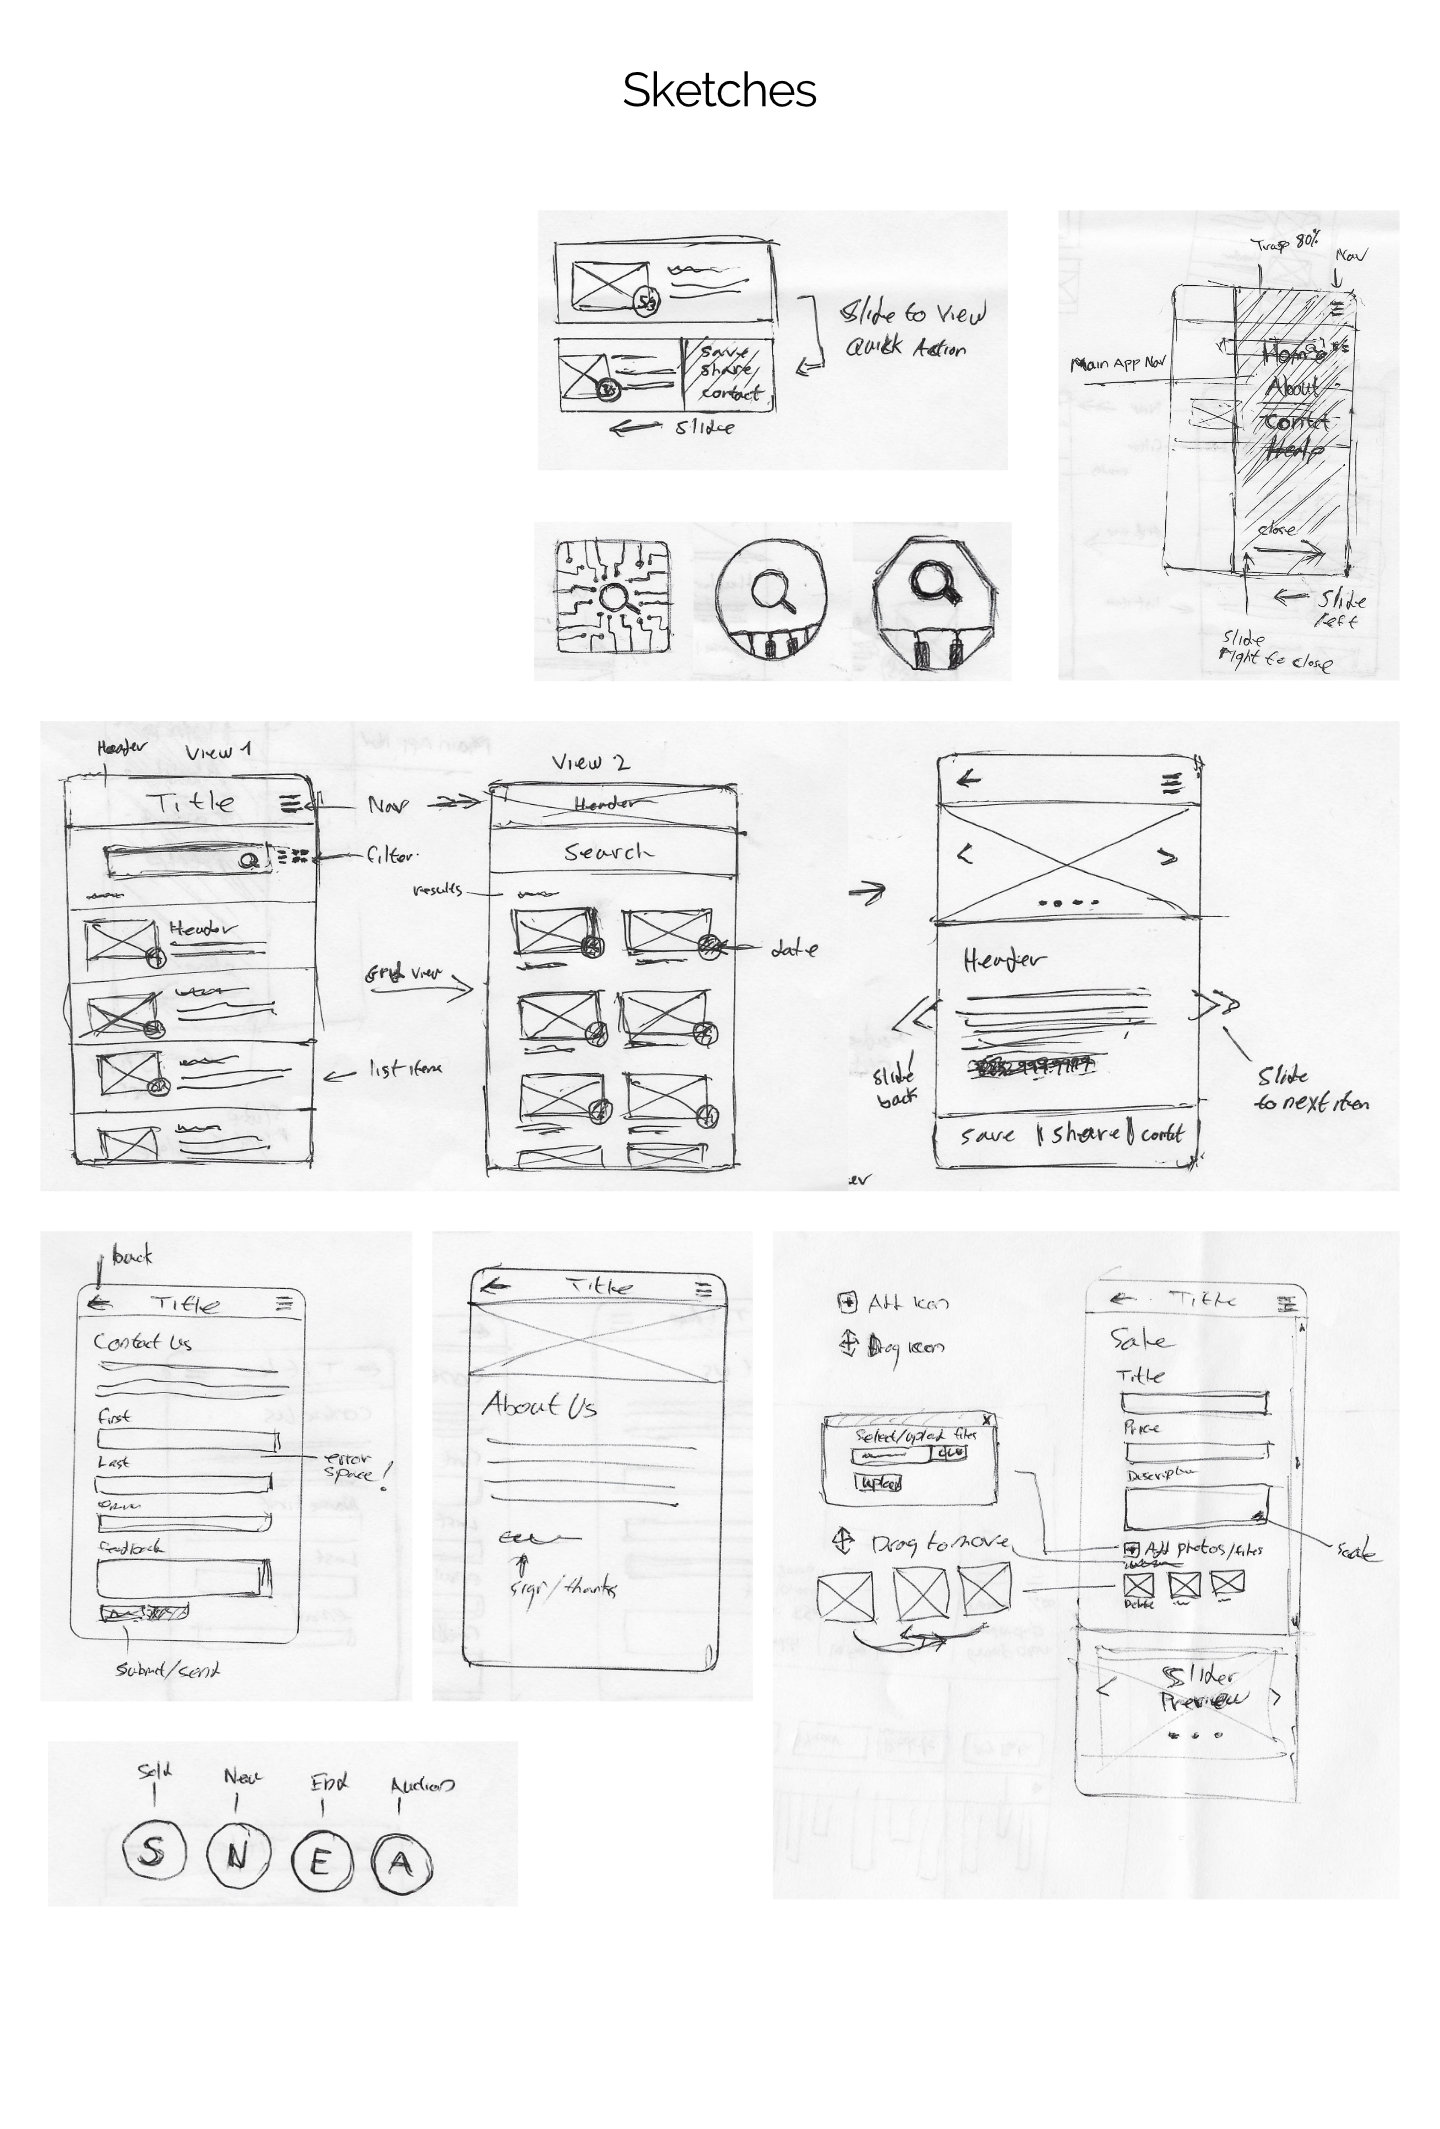 Image of mobile App sketches design.